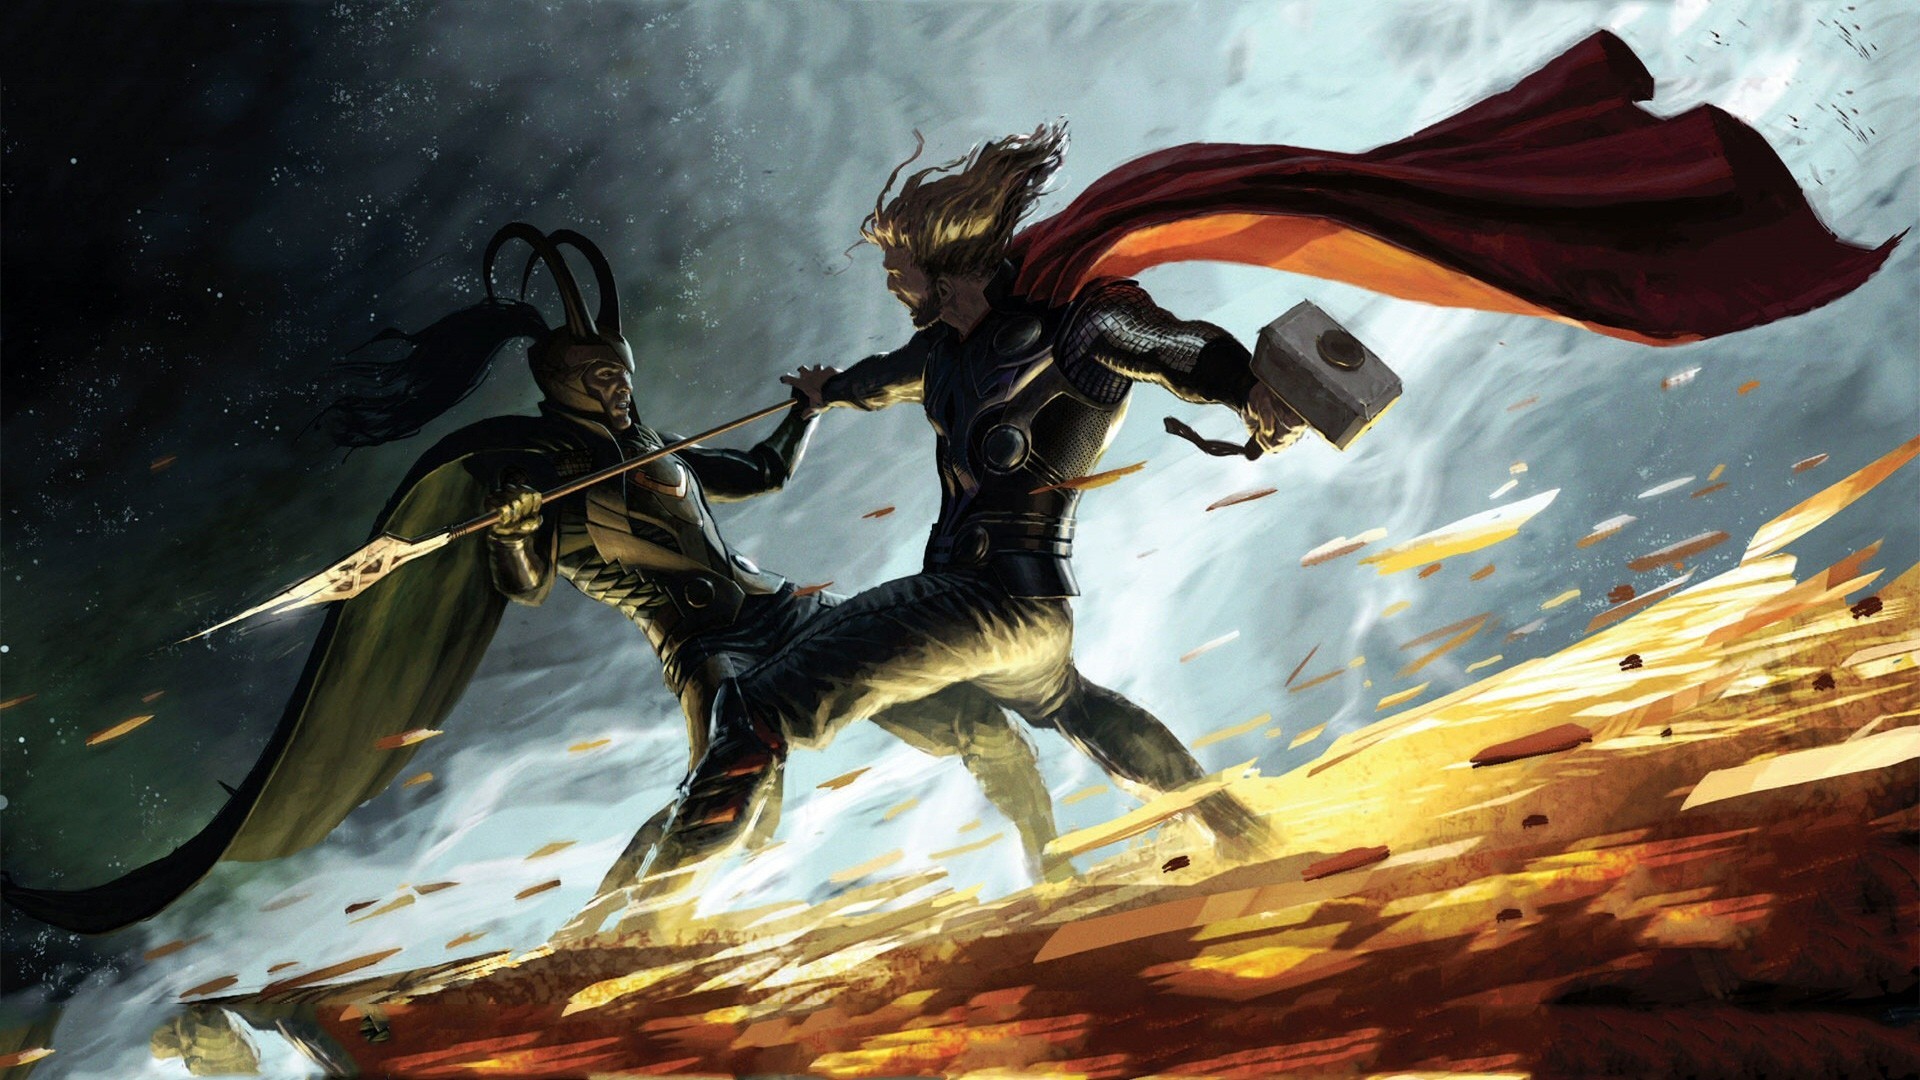 General 1920x1080 comics Thor Loki Marvel Comics hammer spear battle comic art men cape digital art low light